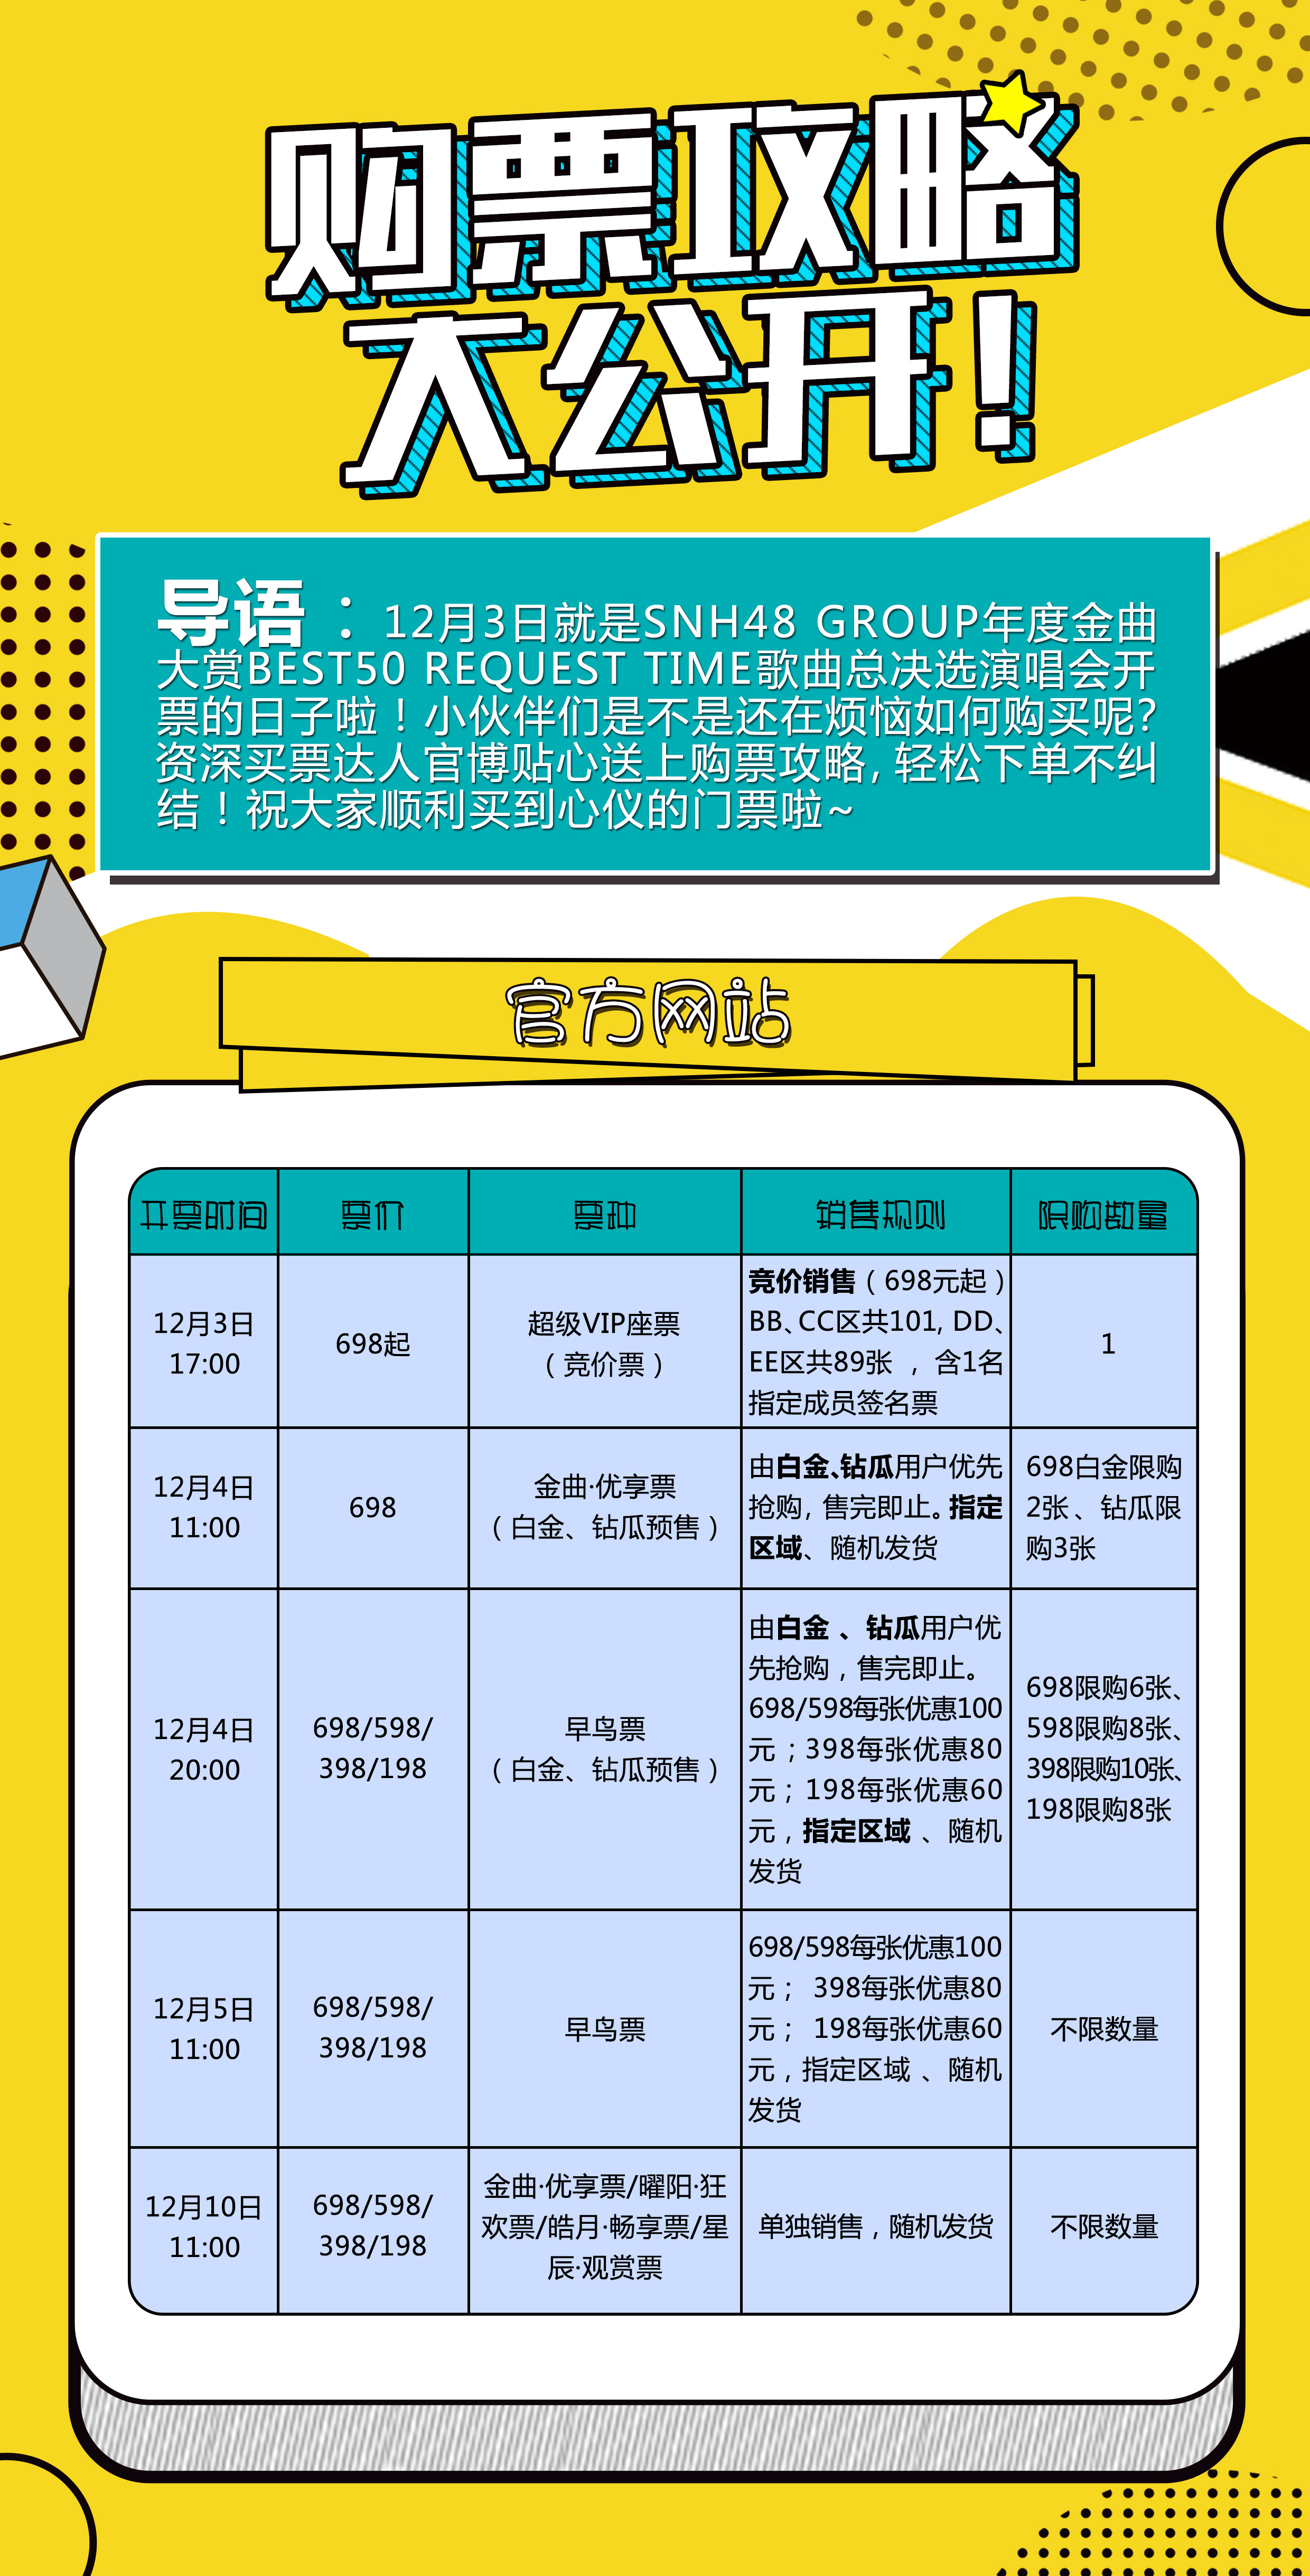 snh48 第五届金曲大赏广州演唱会门票开售，见证SNH48战略大重组